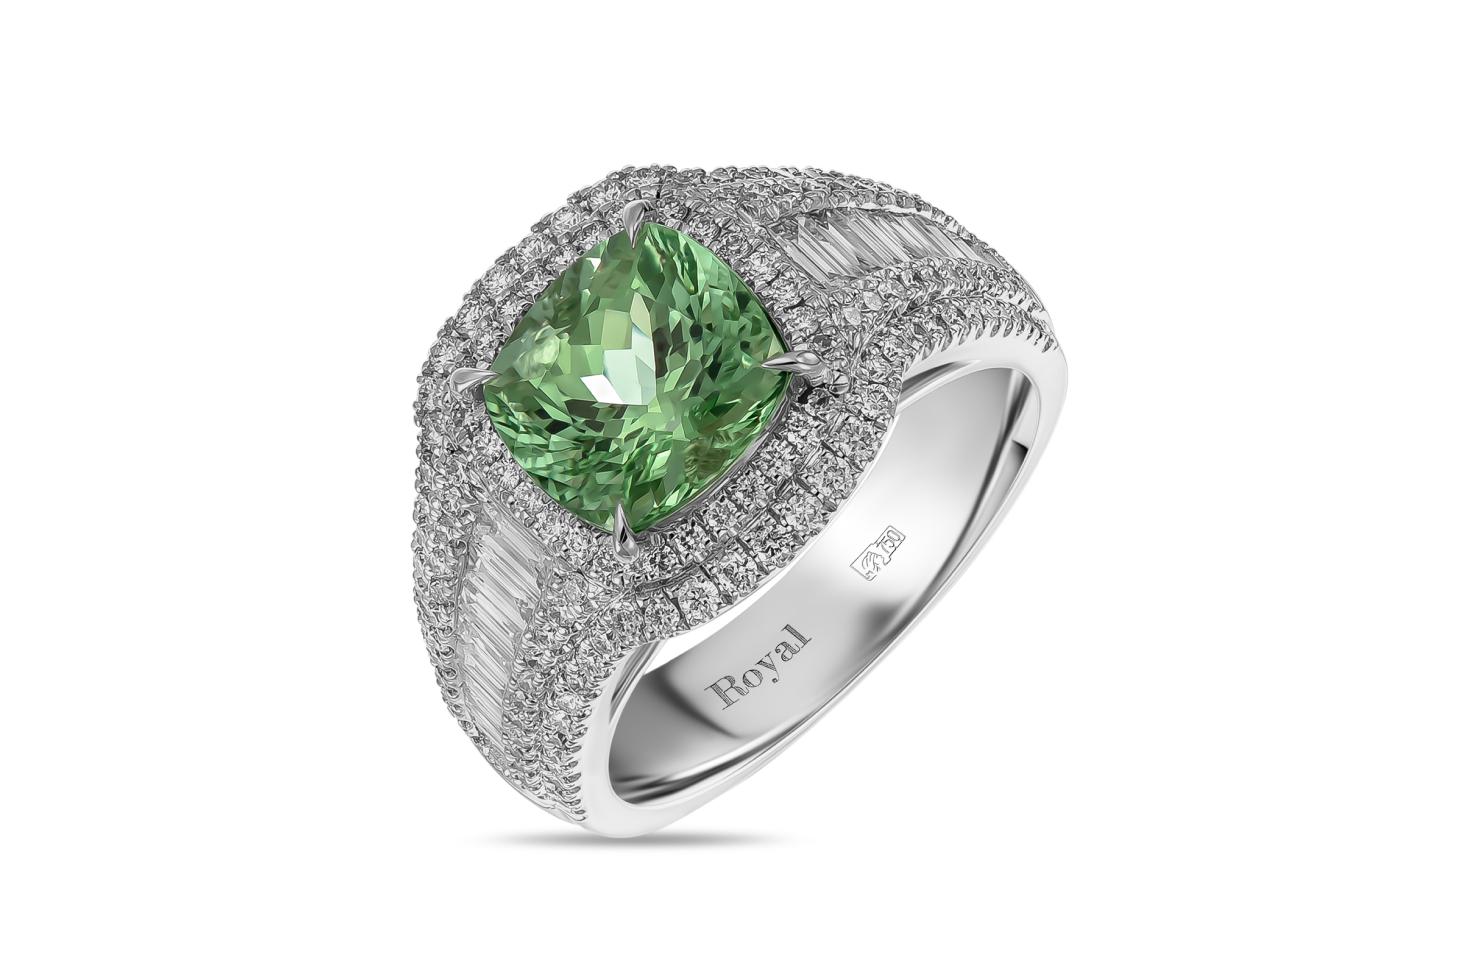 Cushion-cut diamond and tsavorite ring, 2.91 carats